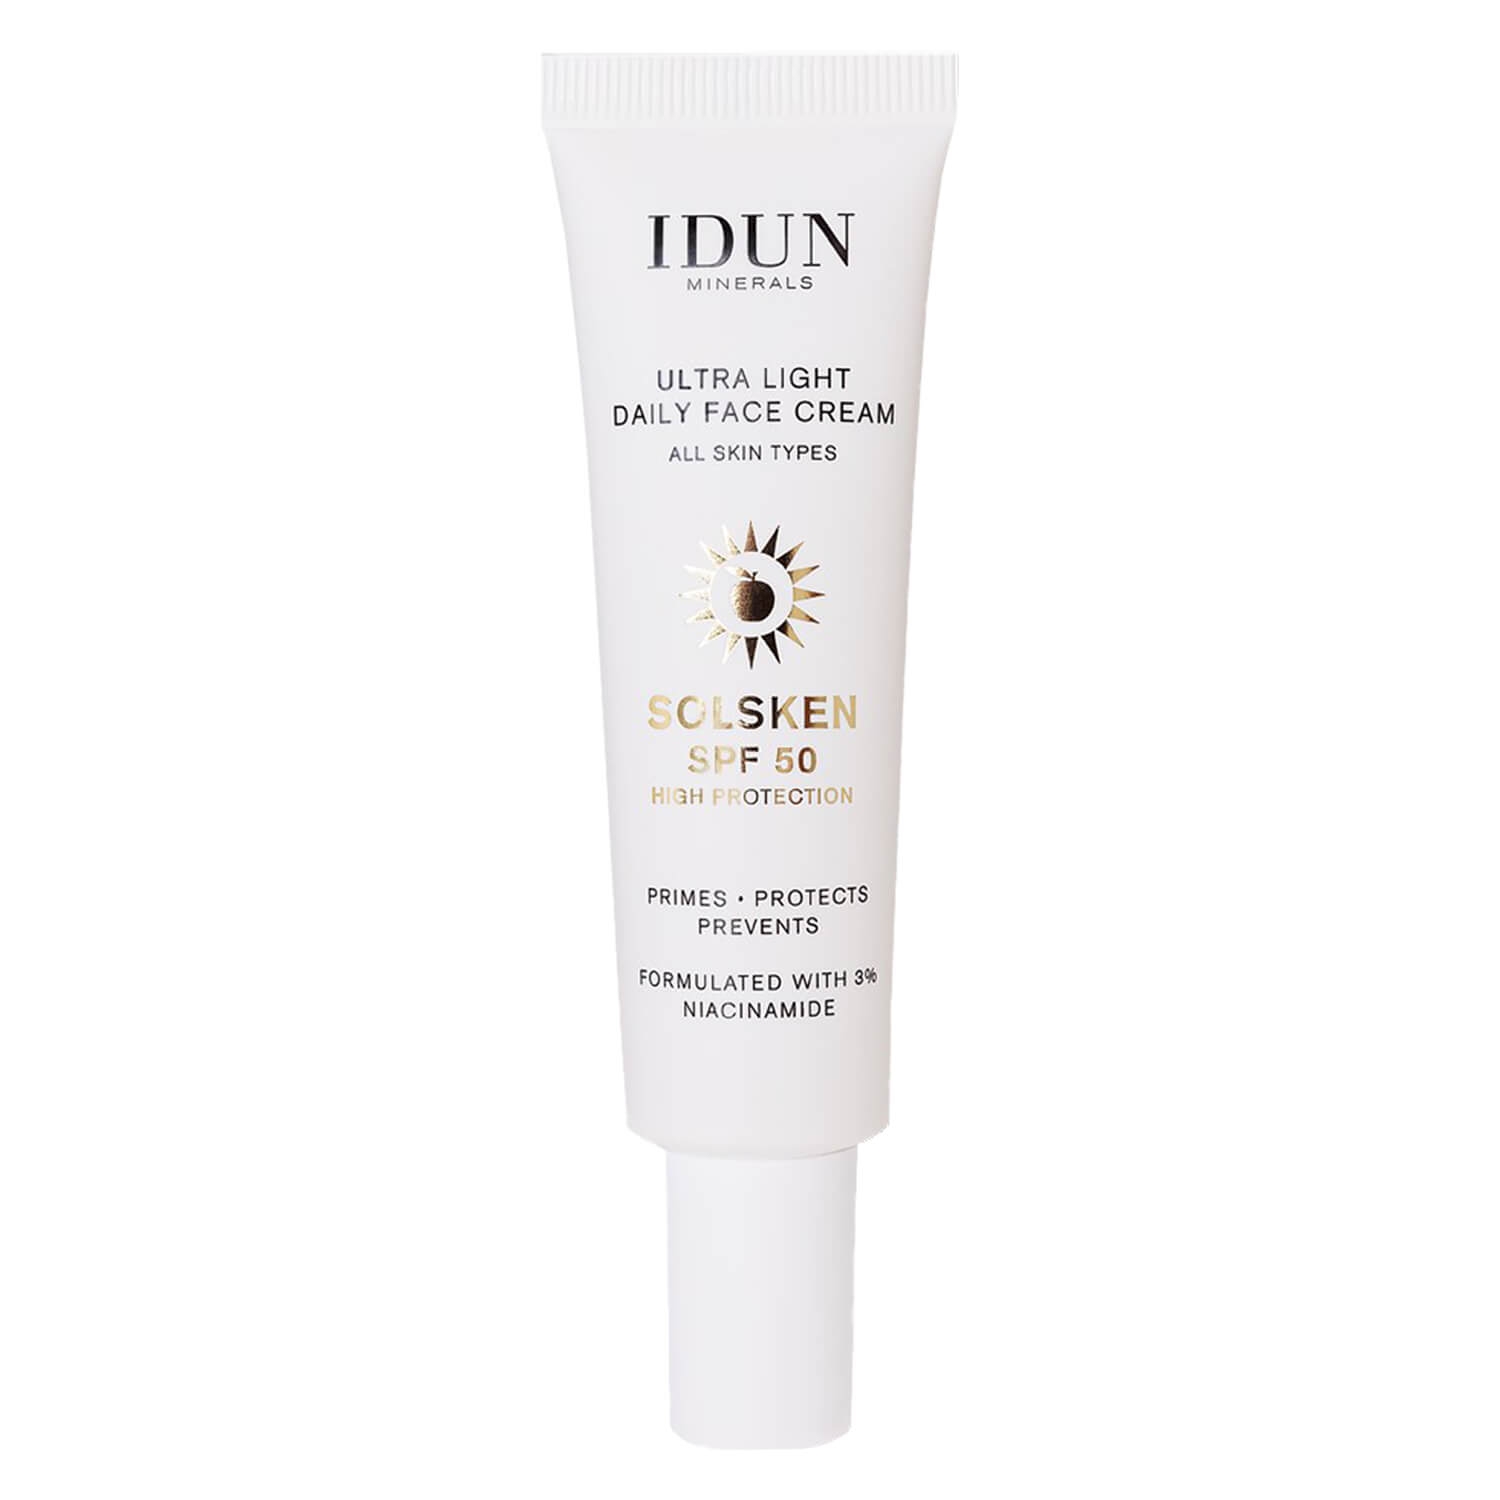 Image du produit de IDUN Skincare - Ultra Light Daily Face Cream Solsken SPF 50